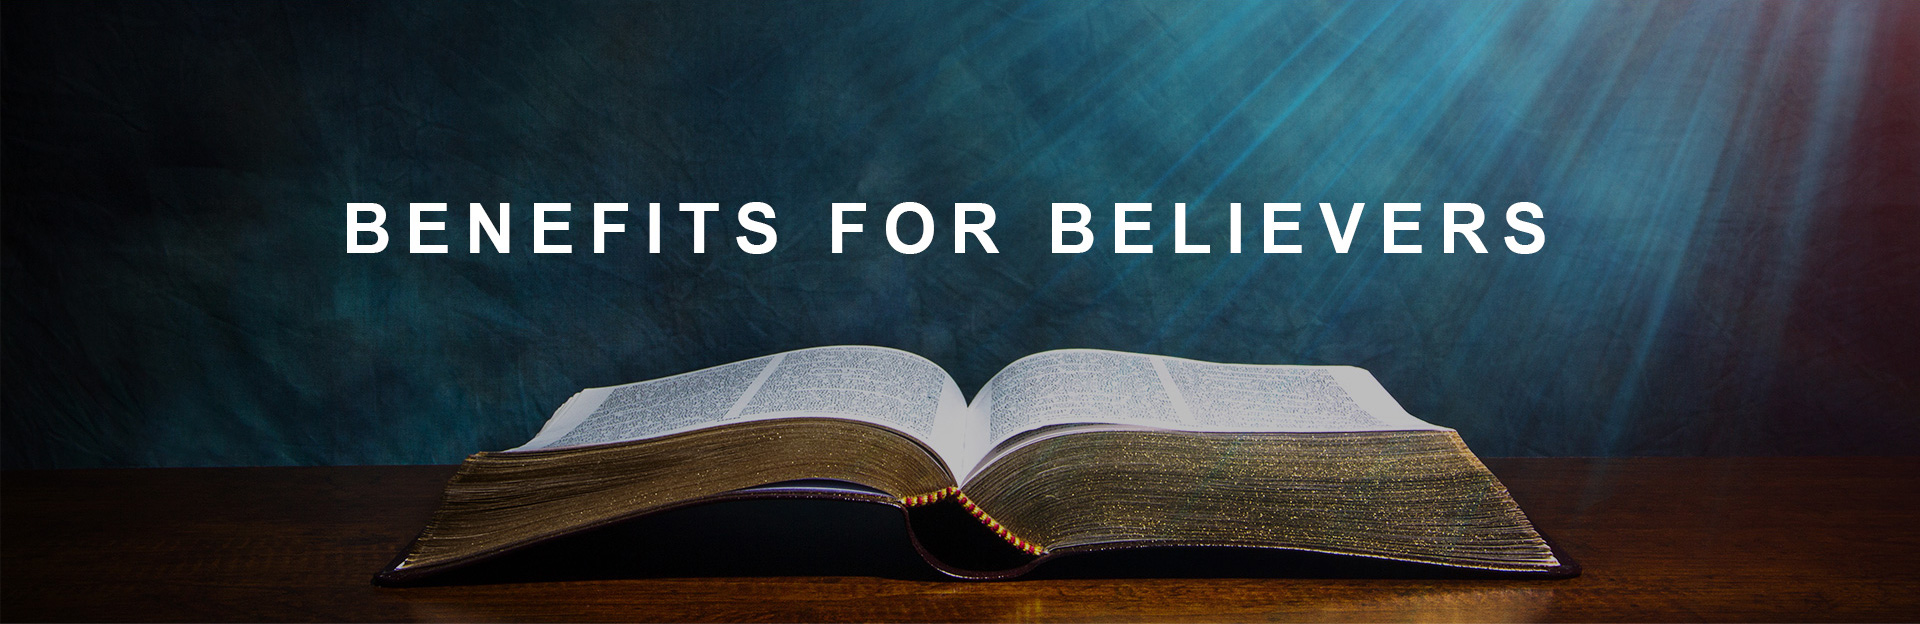 BENEFITS FOR BELIEVERS